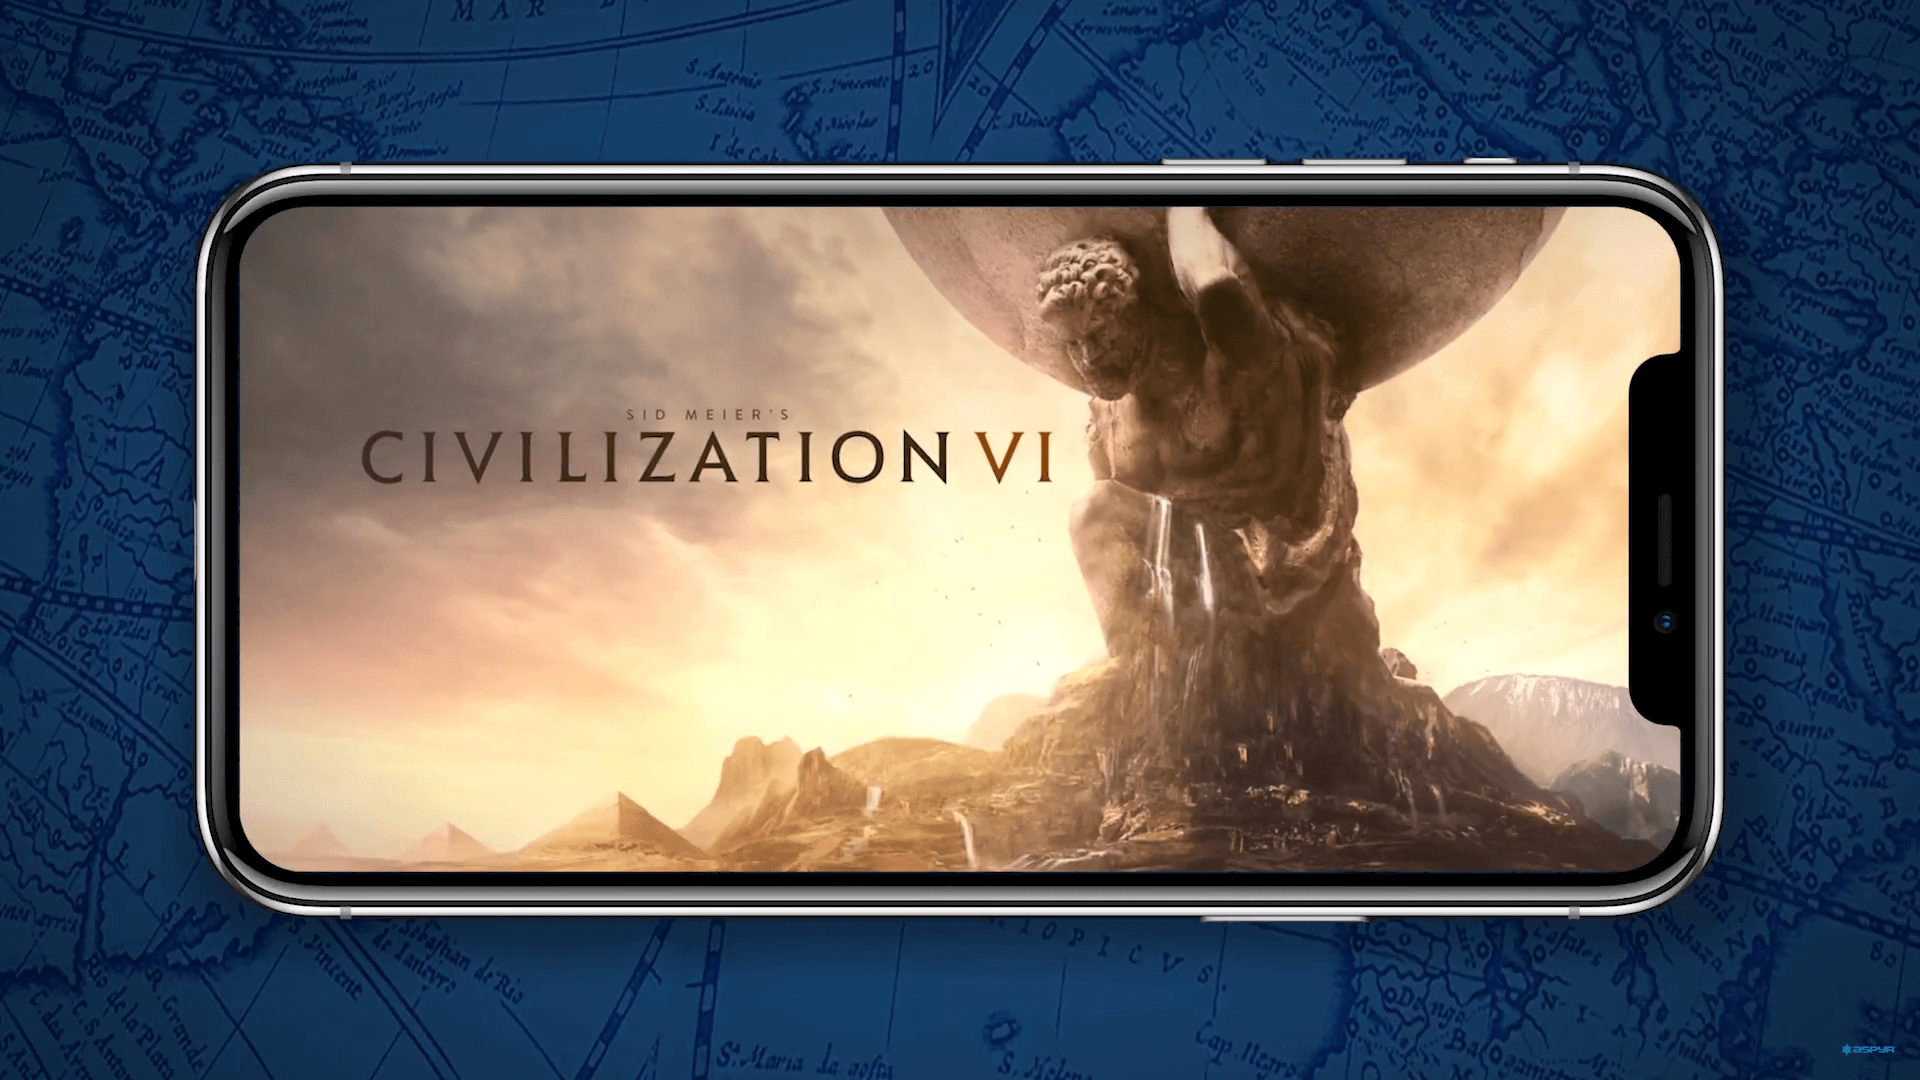 Sid Meier's Civilization VI works on iPhones fairly well